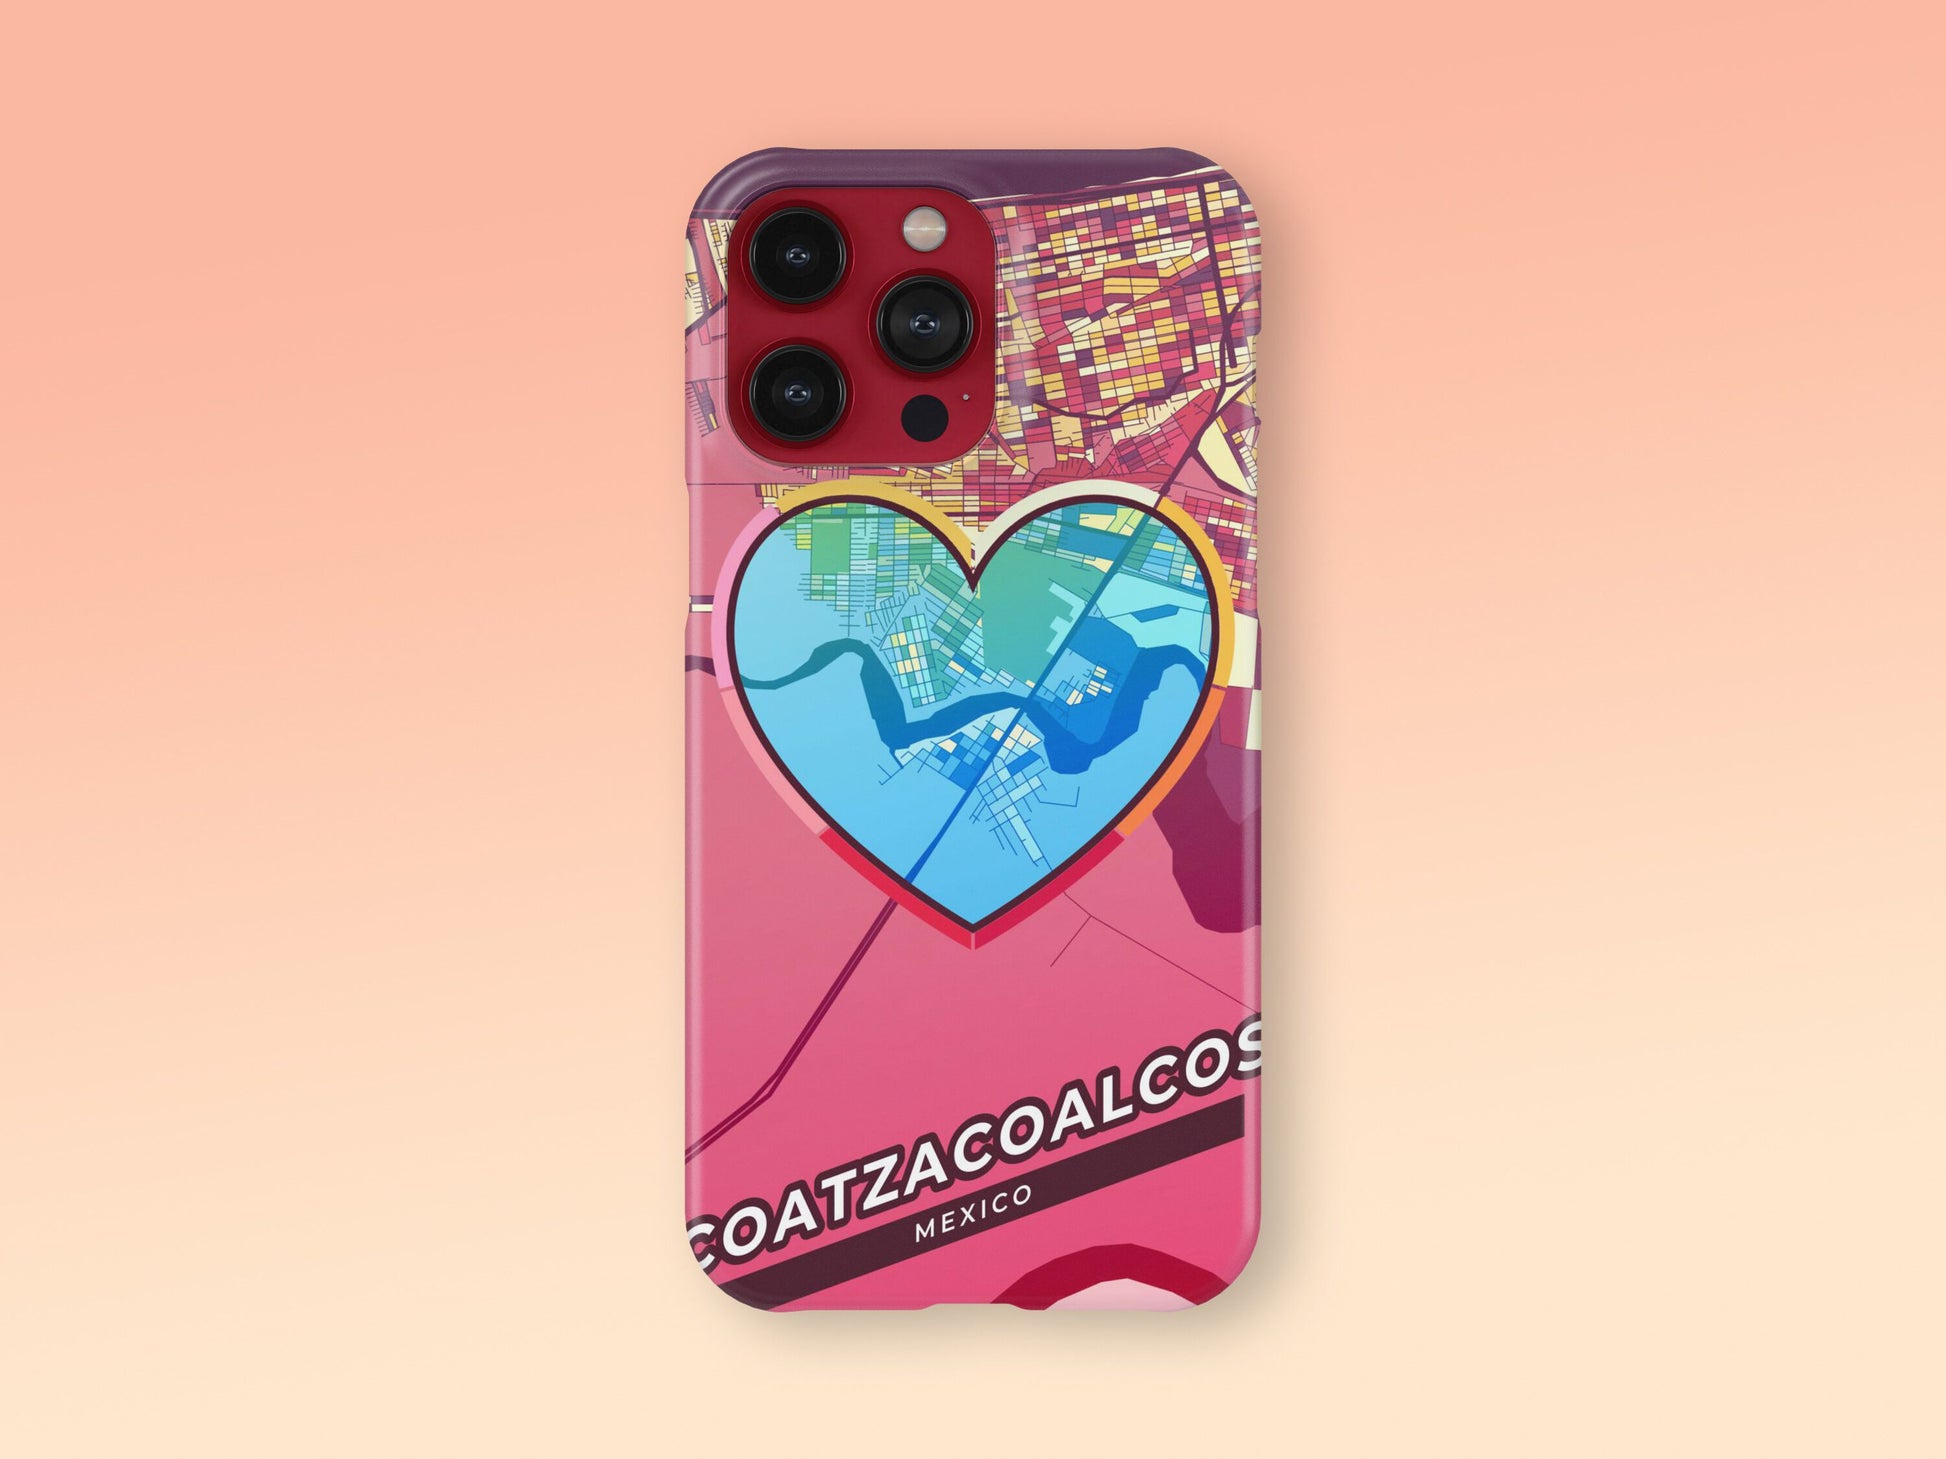 Coatzacoalcos Mexico slim phone case with colorful icon. Birthday, wedding or housewarming gift. Couple match cases. 2